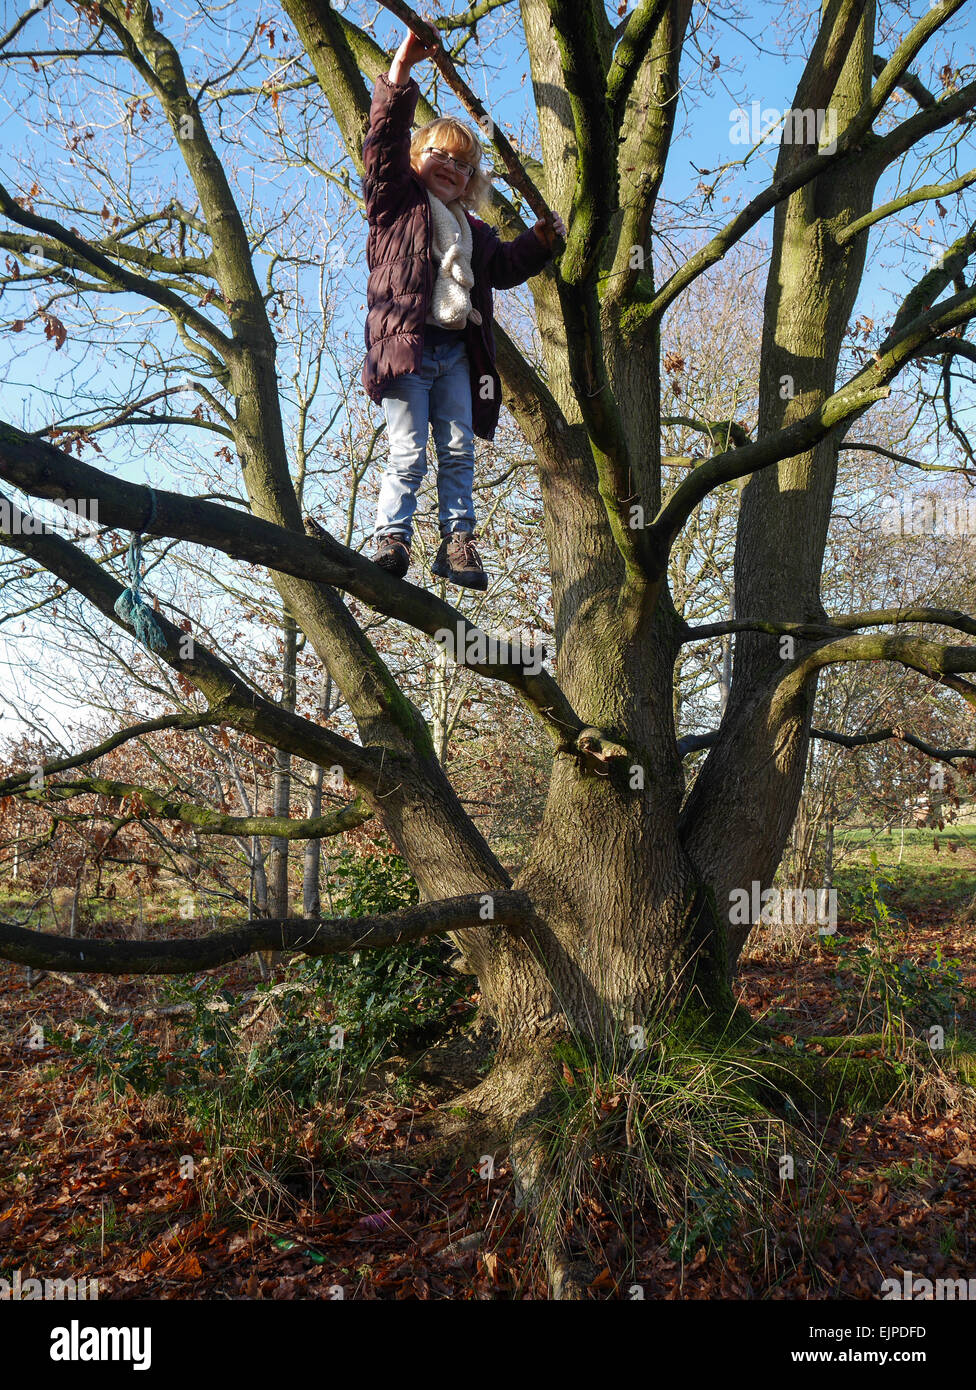 Young girl climbing a tree Stock Photo